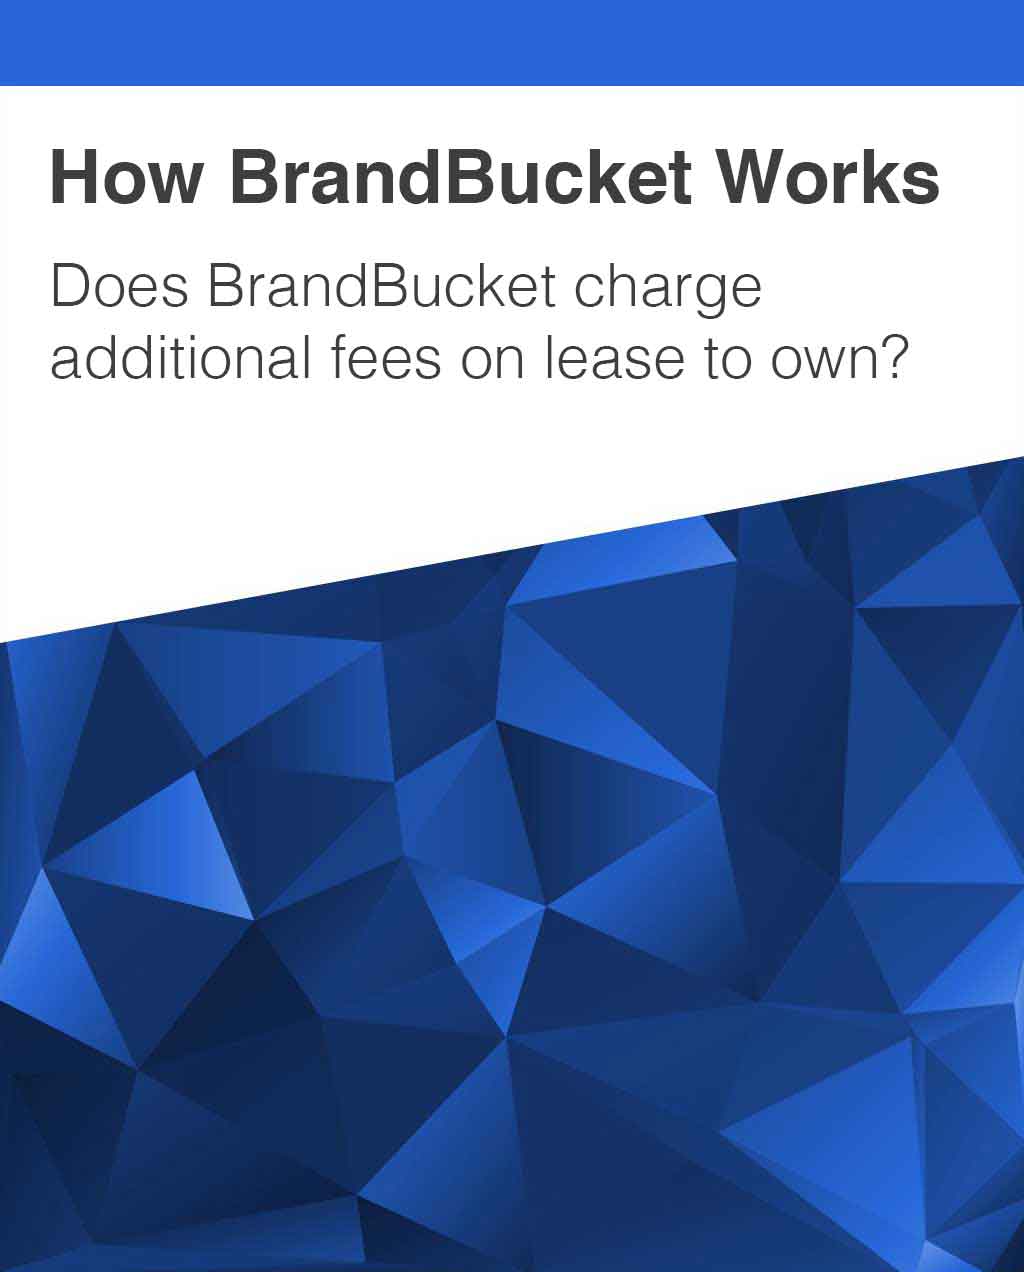 BrandBucket’s Lease-to-Own Program